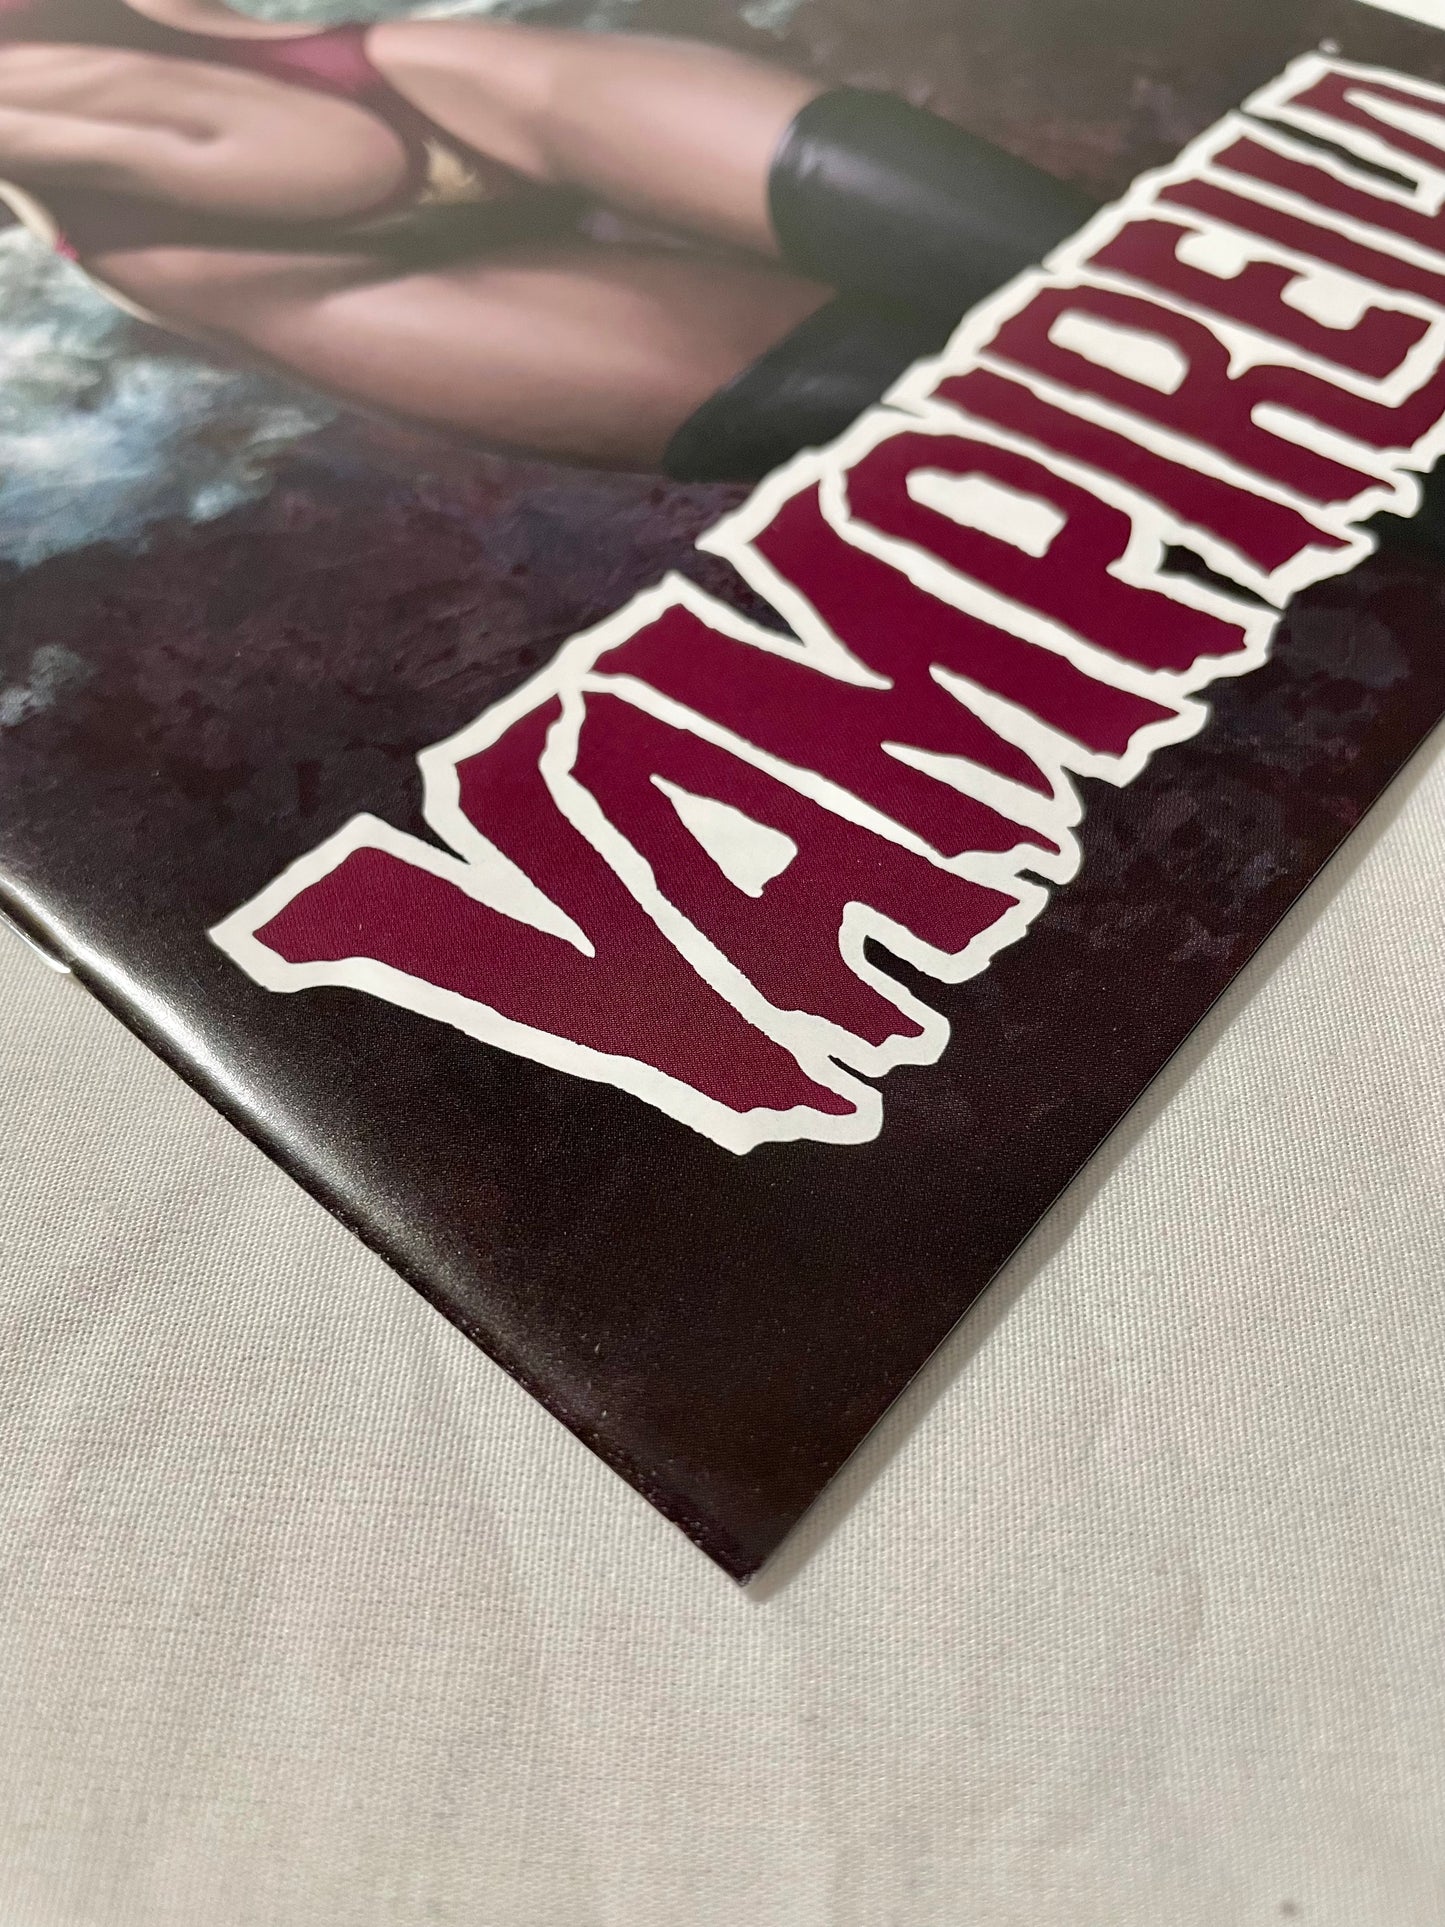 Dynamite Entertainment Vampirella #4  (2019)